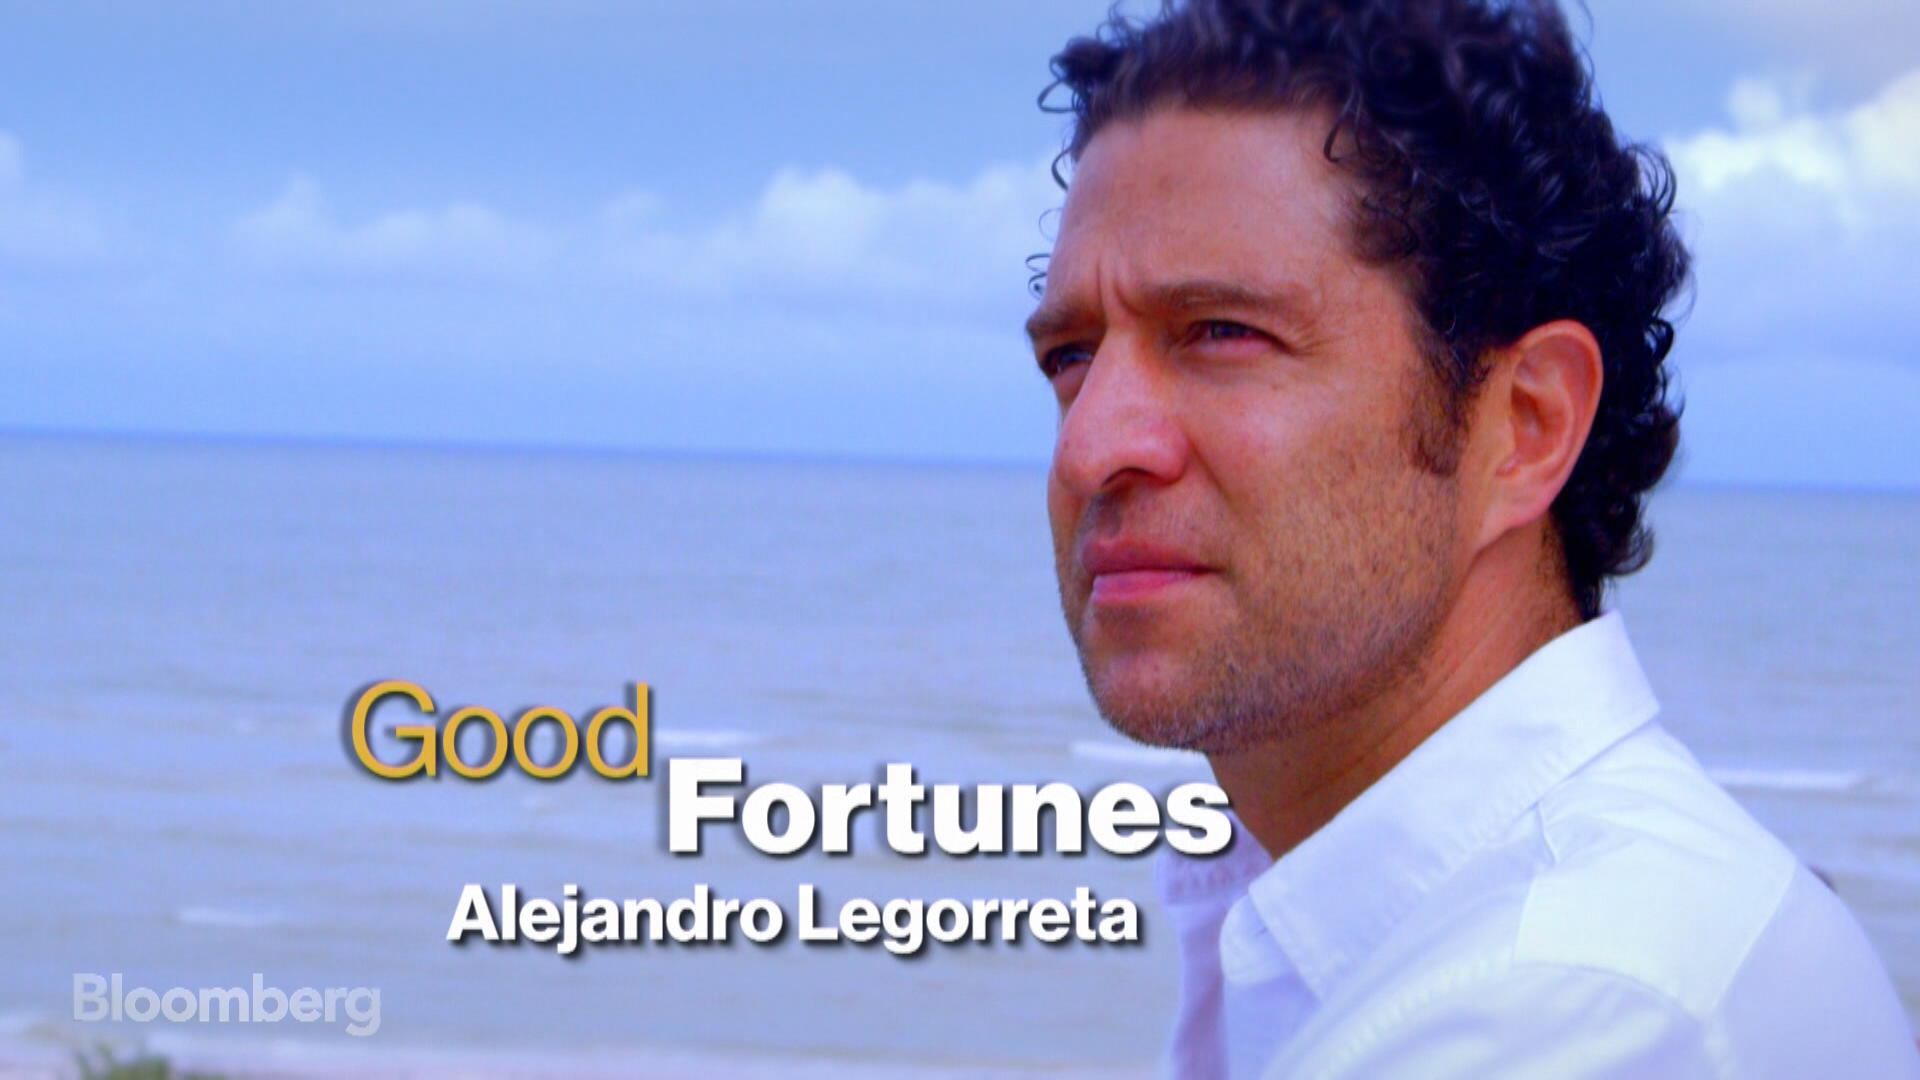 Watch Aditya Mittal: Good Fortunes (Full show 11/05) - Bloomberg